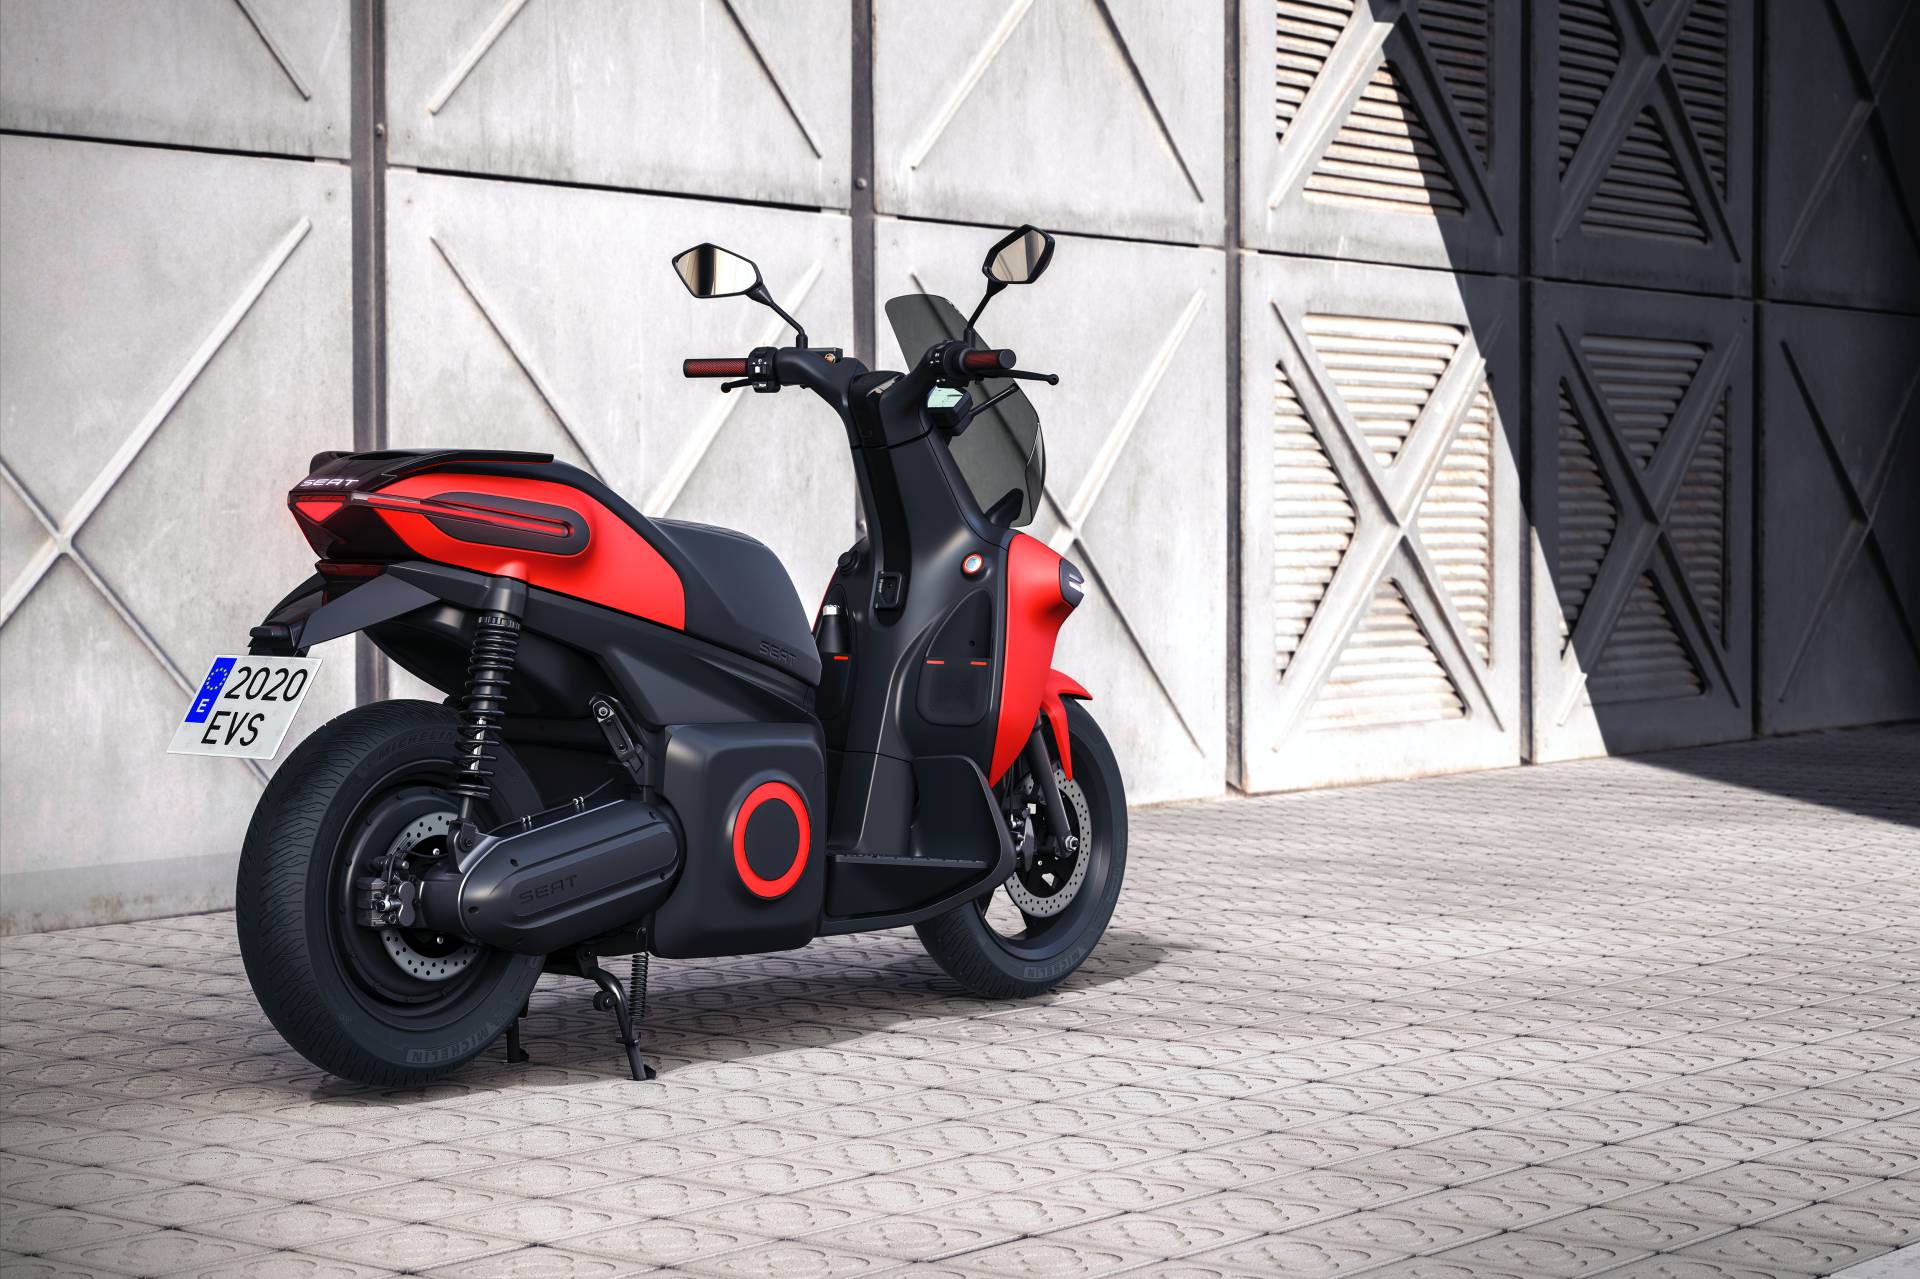 Seat, elektrikli motosiklet konsepti e-Scooter'ı tanıttı